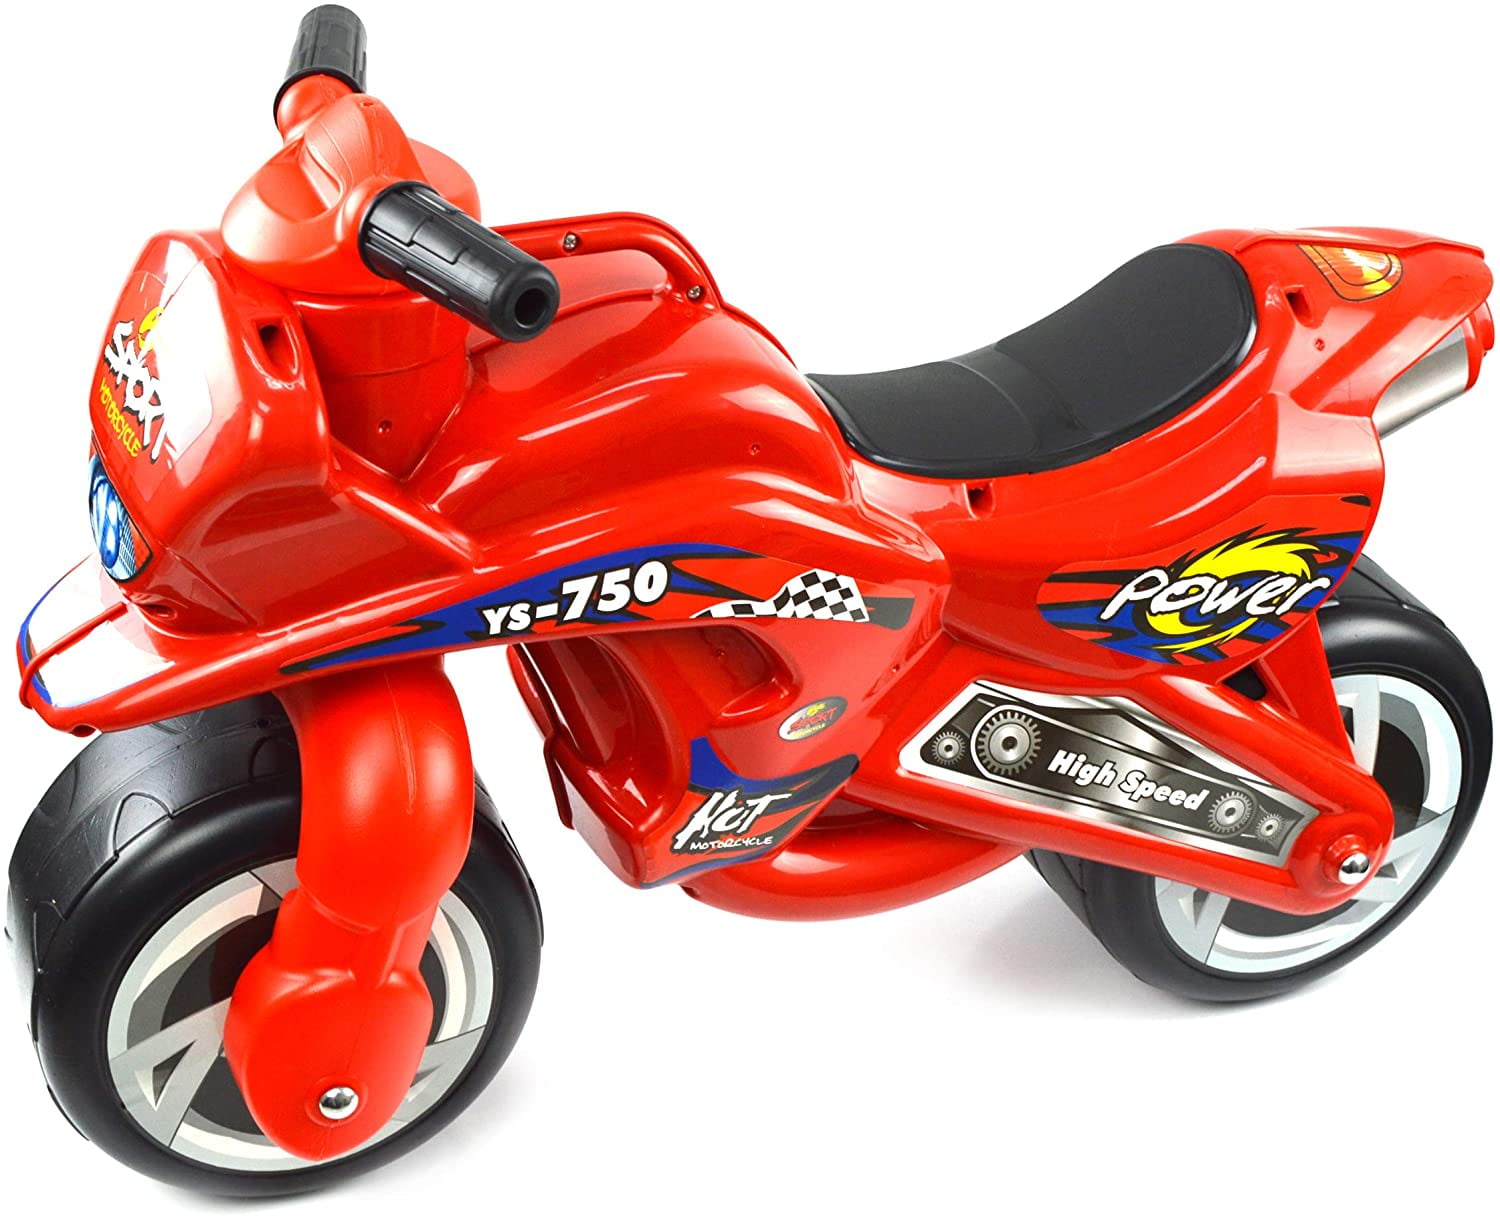 motorcycle push toy